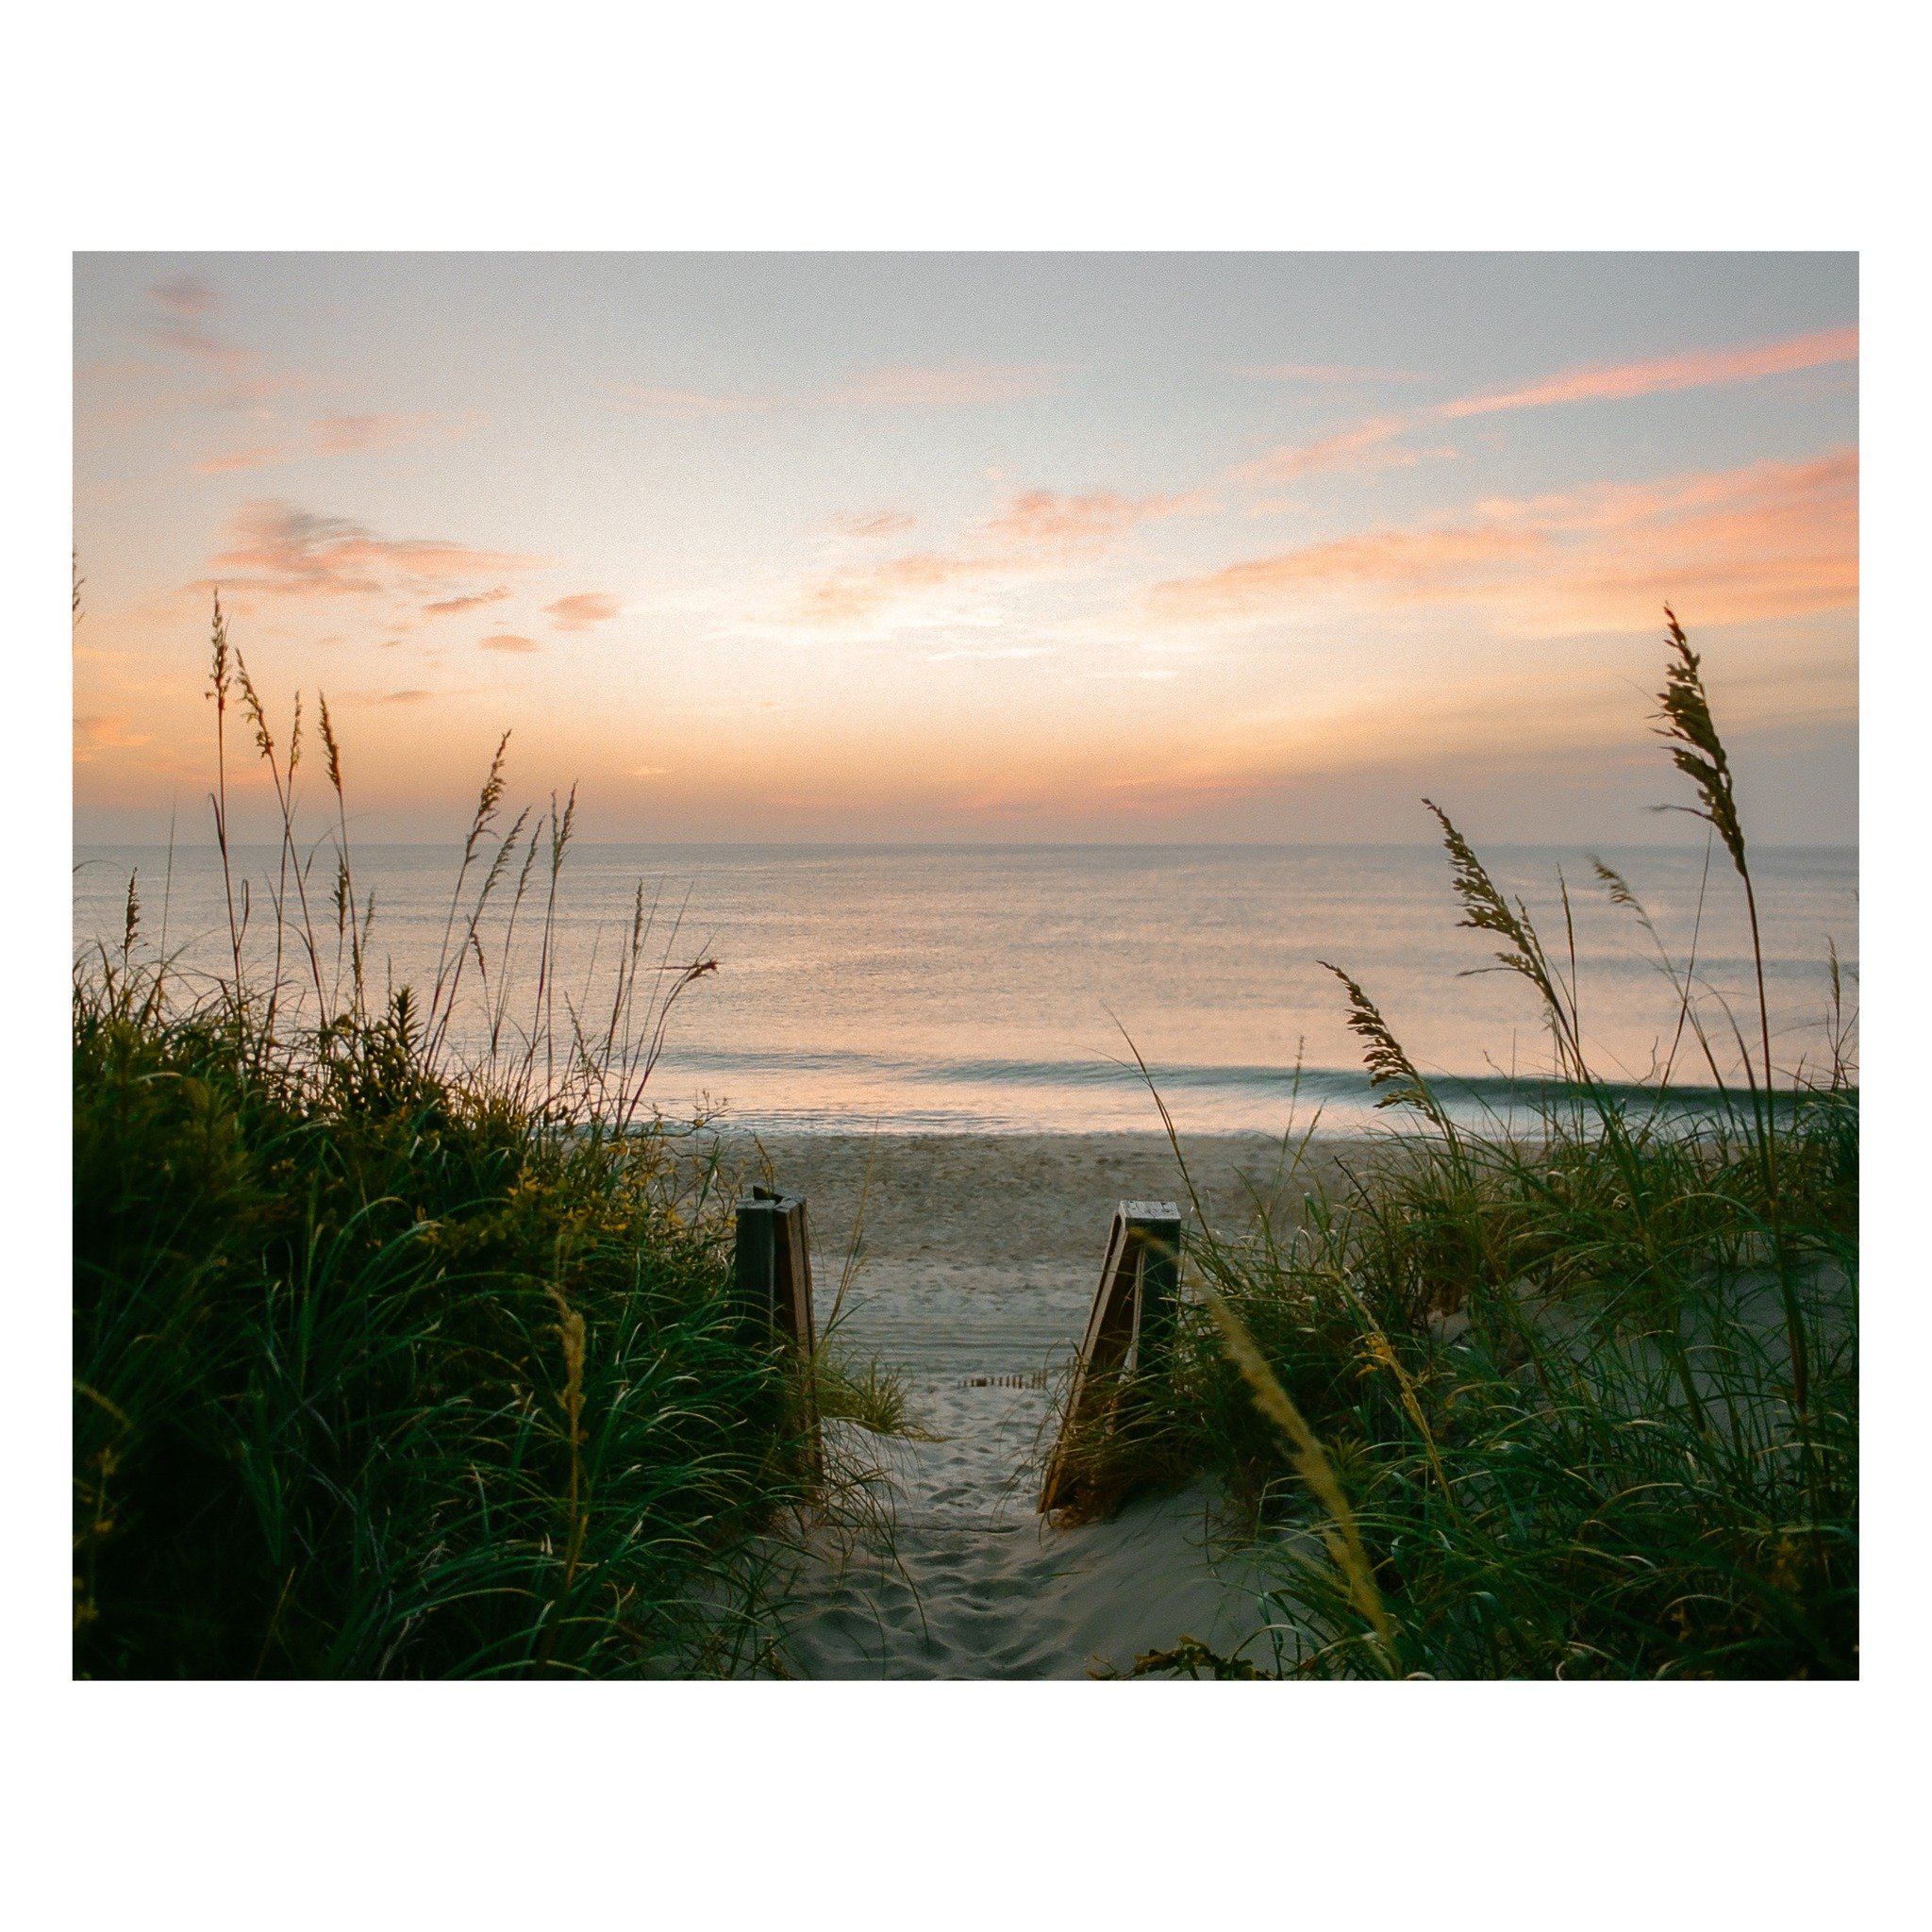 Early morning OBX beach scenes.

#nikonfm2n #portra400 #thefindlab #shootfilmmag #madewithkodak #kodakportra400 #35mmfilm #portrafeed #theanalogclub #analogvibes #woofermagazine #obxonfilm #filmisnotdead